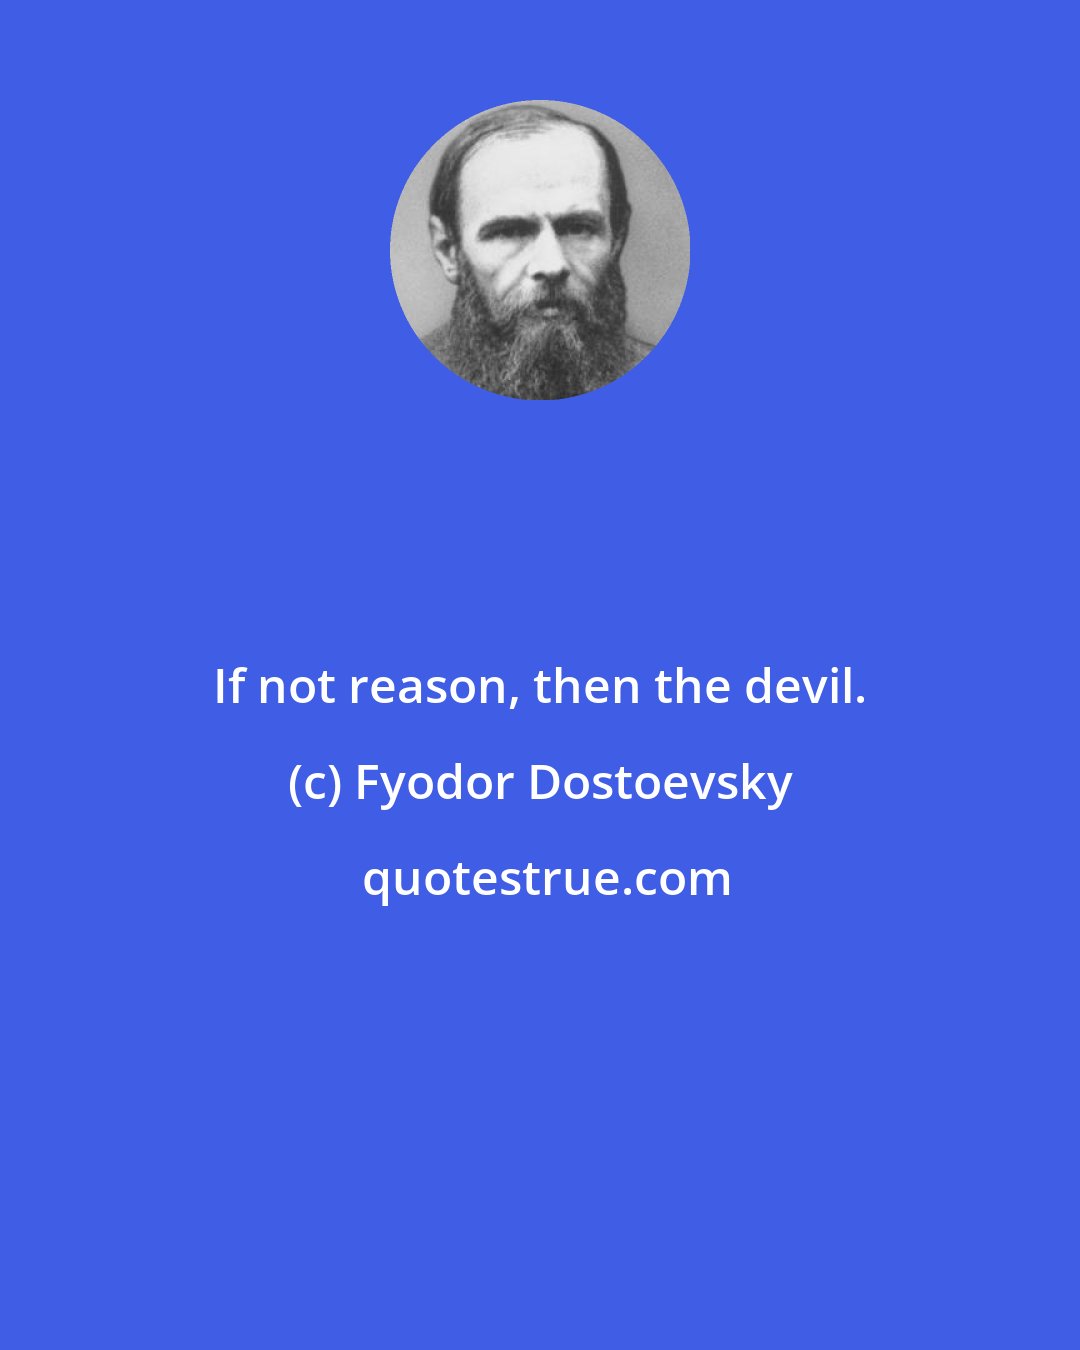 Fyodor Dostoevsky: If not reason, then the devil.